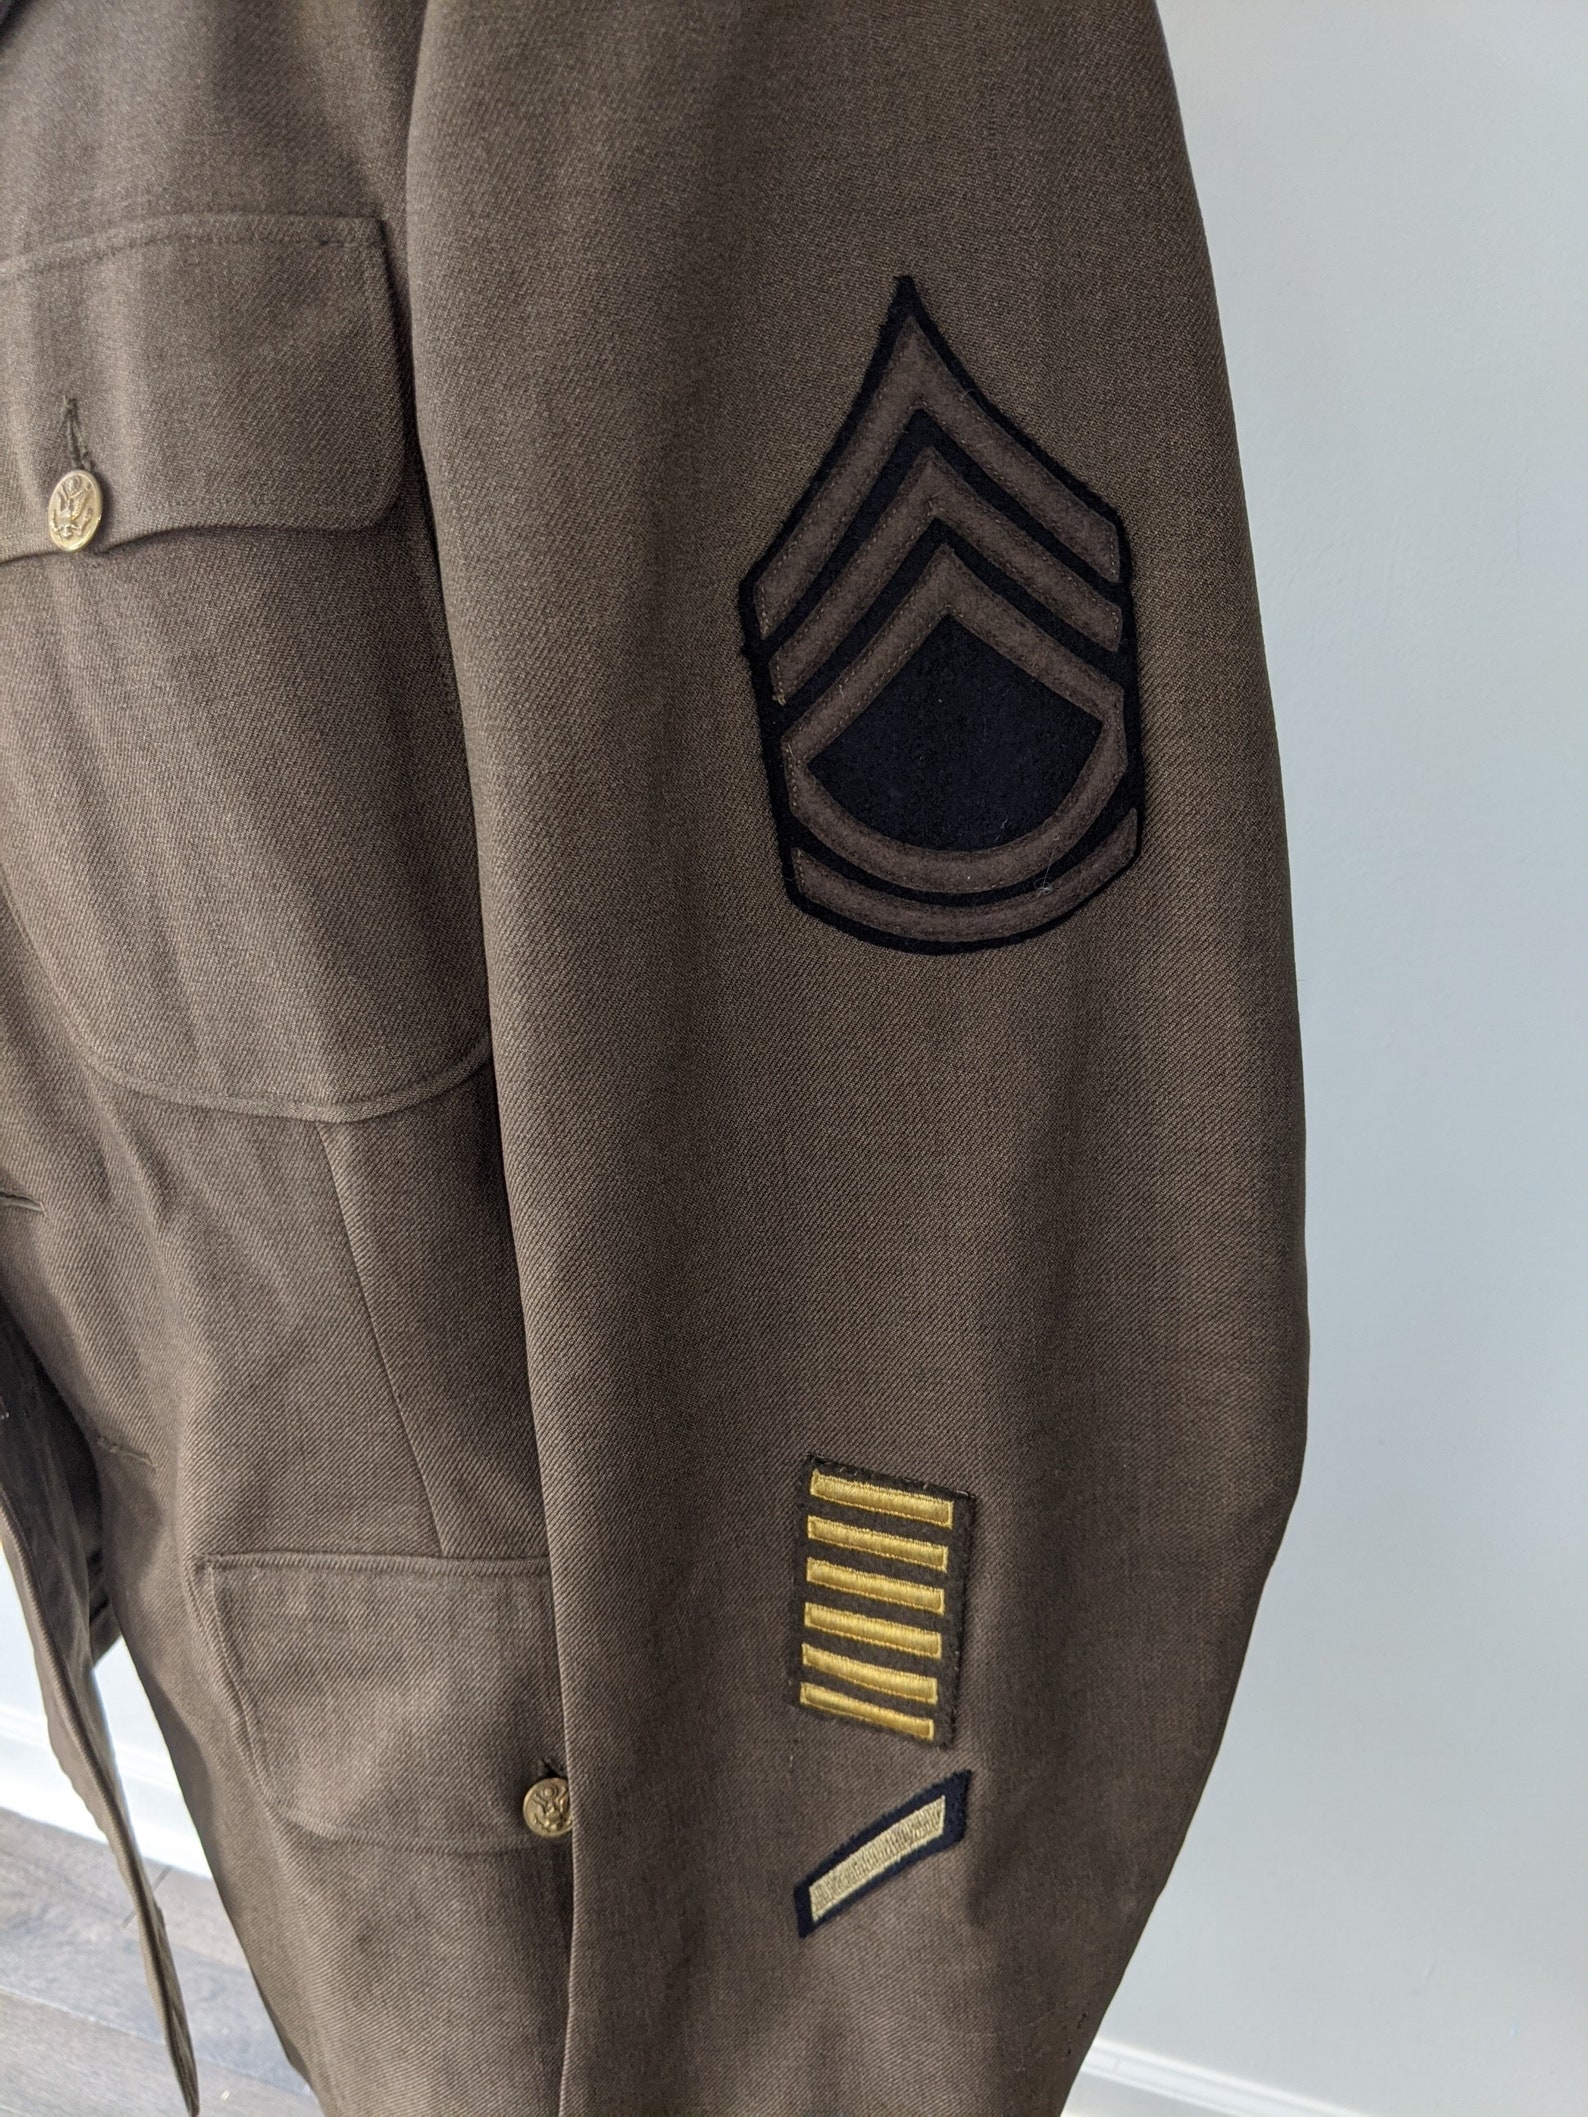 WW2 Marine Corp Gunnery Sergeant dress jacket or tunic with | Etsy